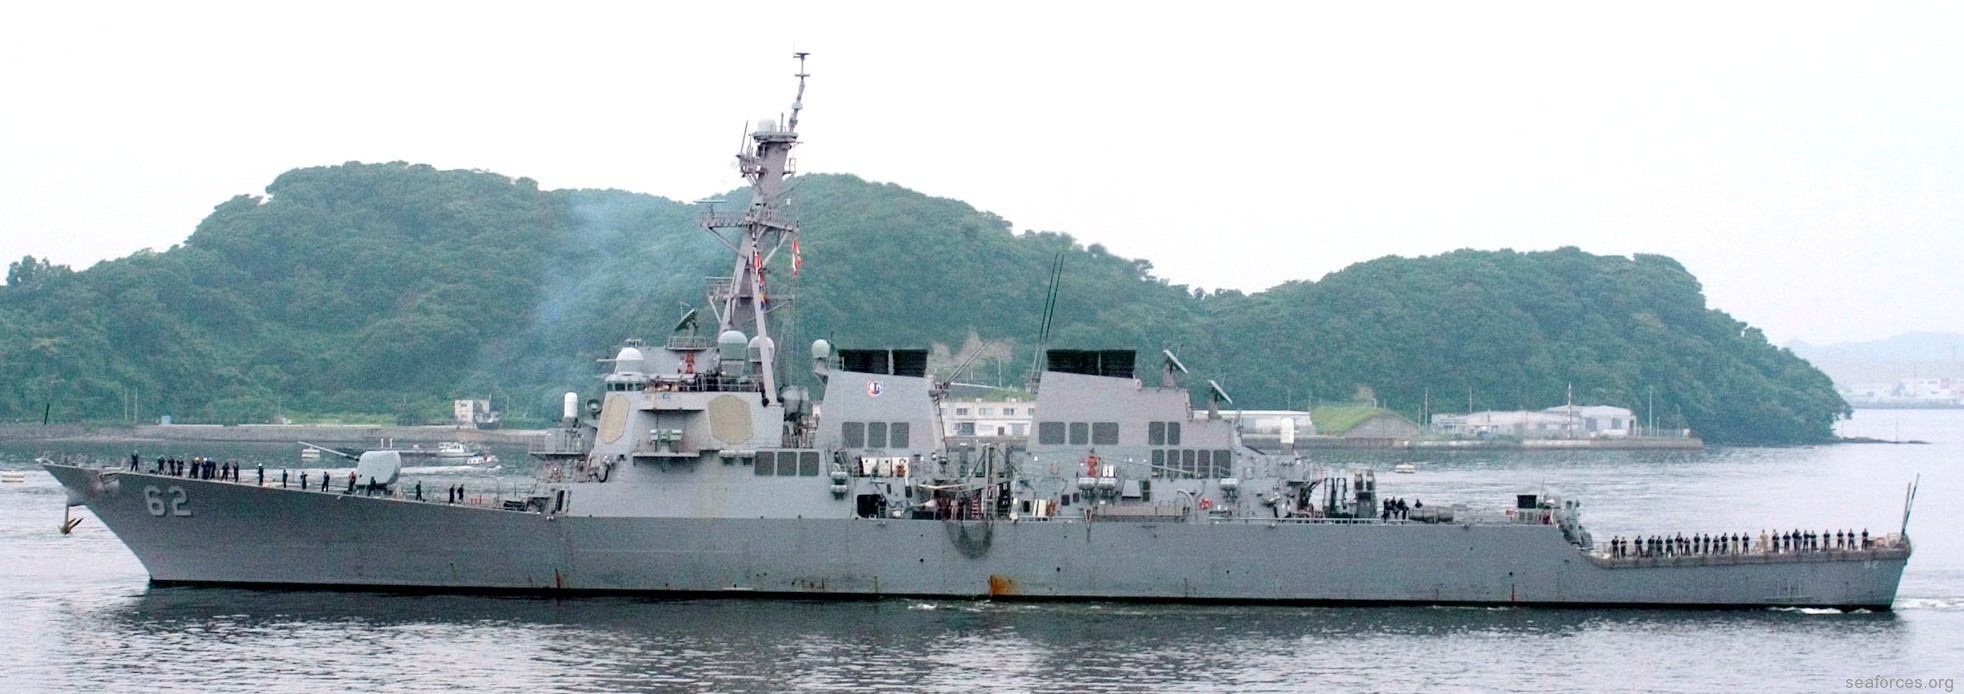 ddg-62 uss fitzgerald guided missile destroyer 2006 83 yokosuka